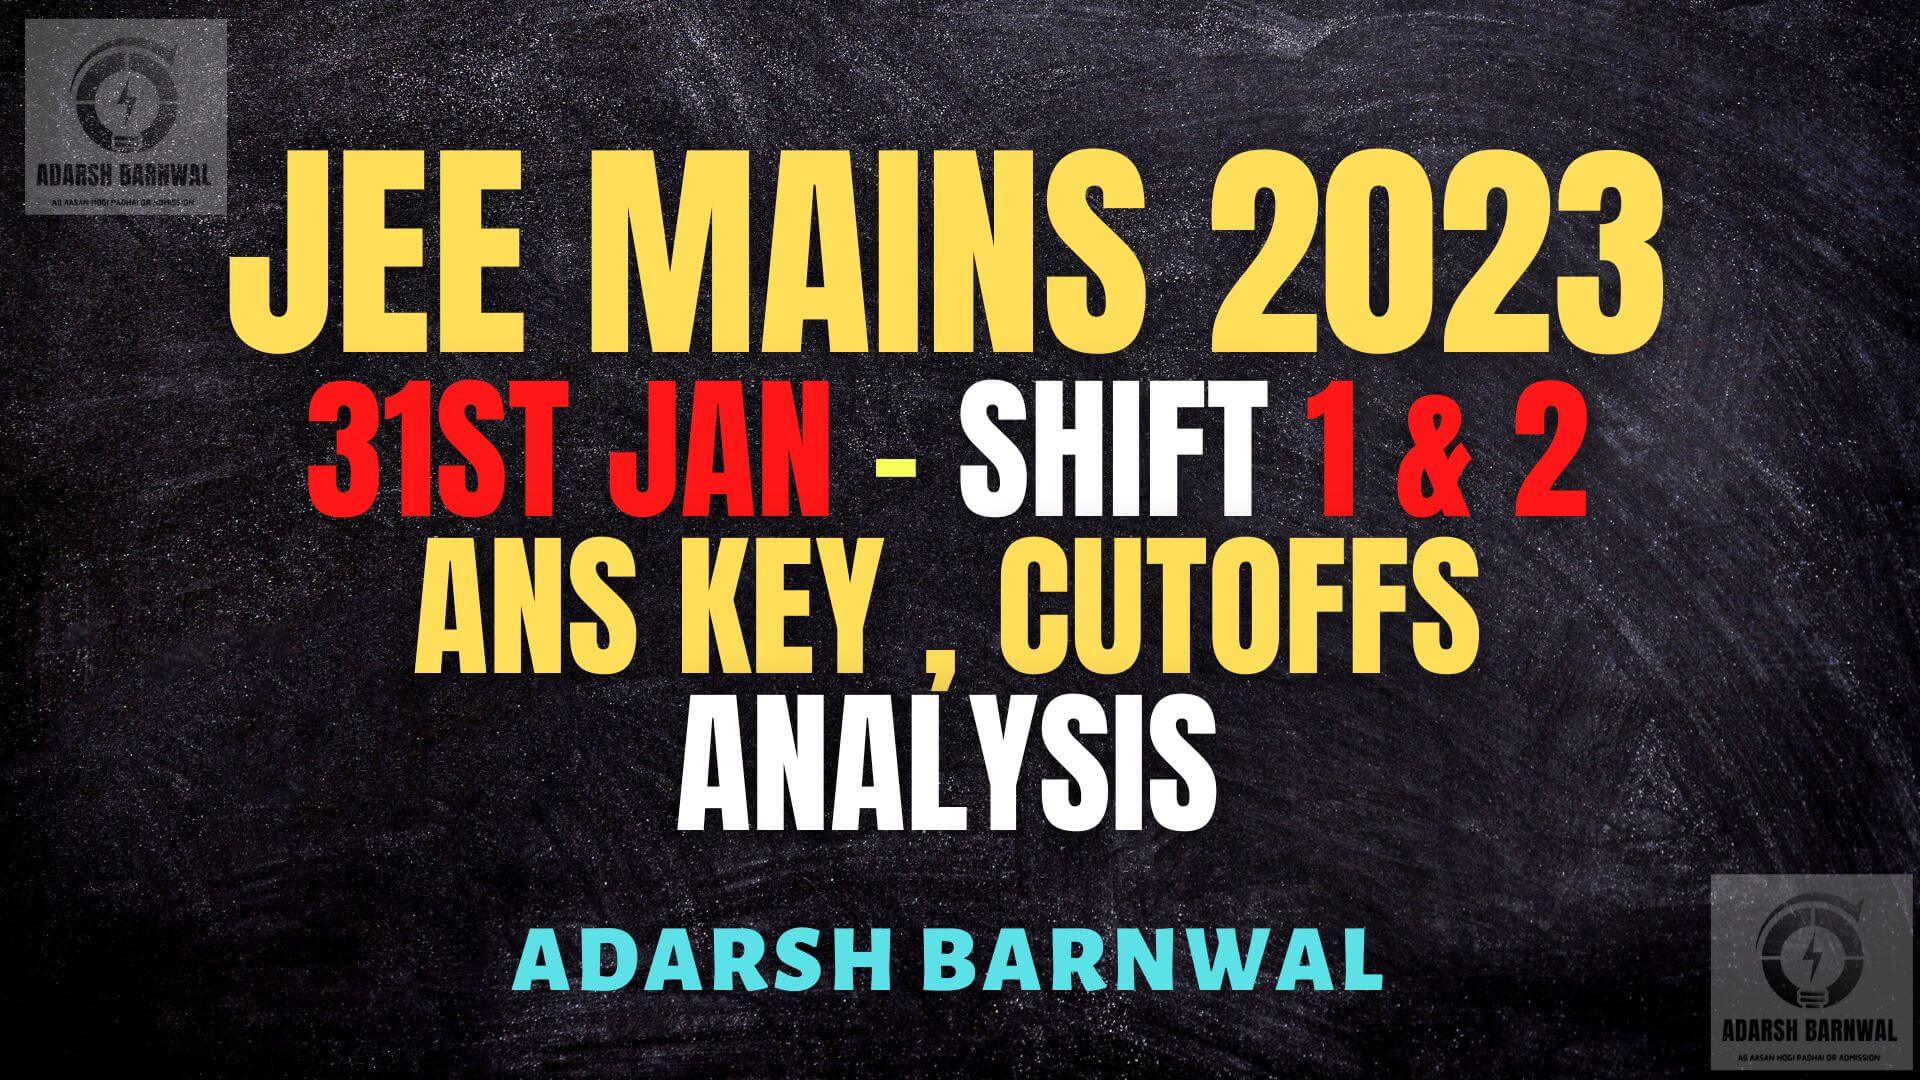 Jee Mains 2023 January 31 shift 1 & Shift 2 analysis ,Answer key , Expected cutoffs by adarsh barnwal